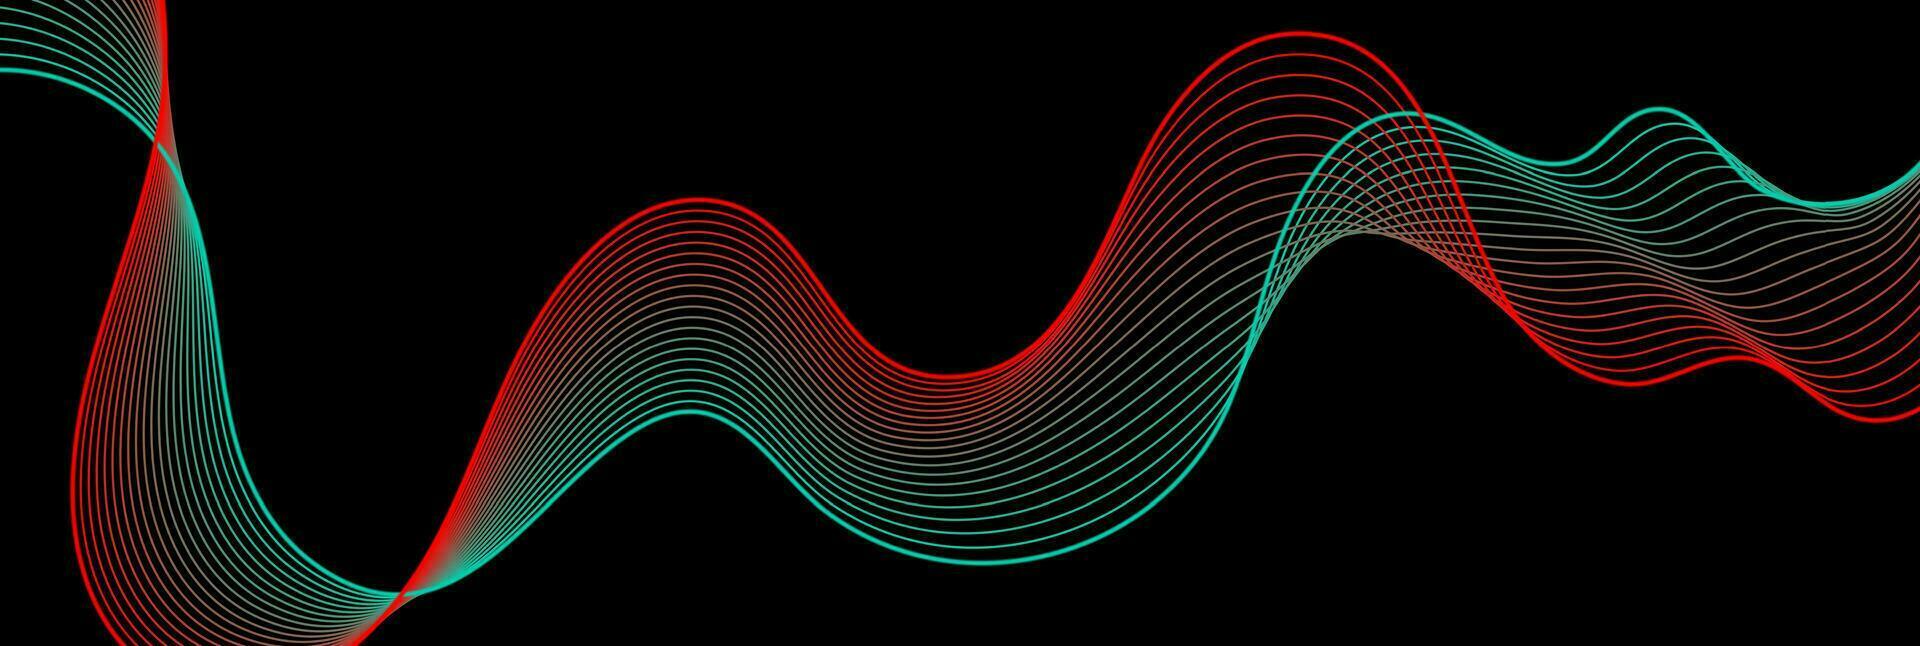 vermelho ciano abstrato néon ondas sonoras conceito fundo vetor